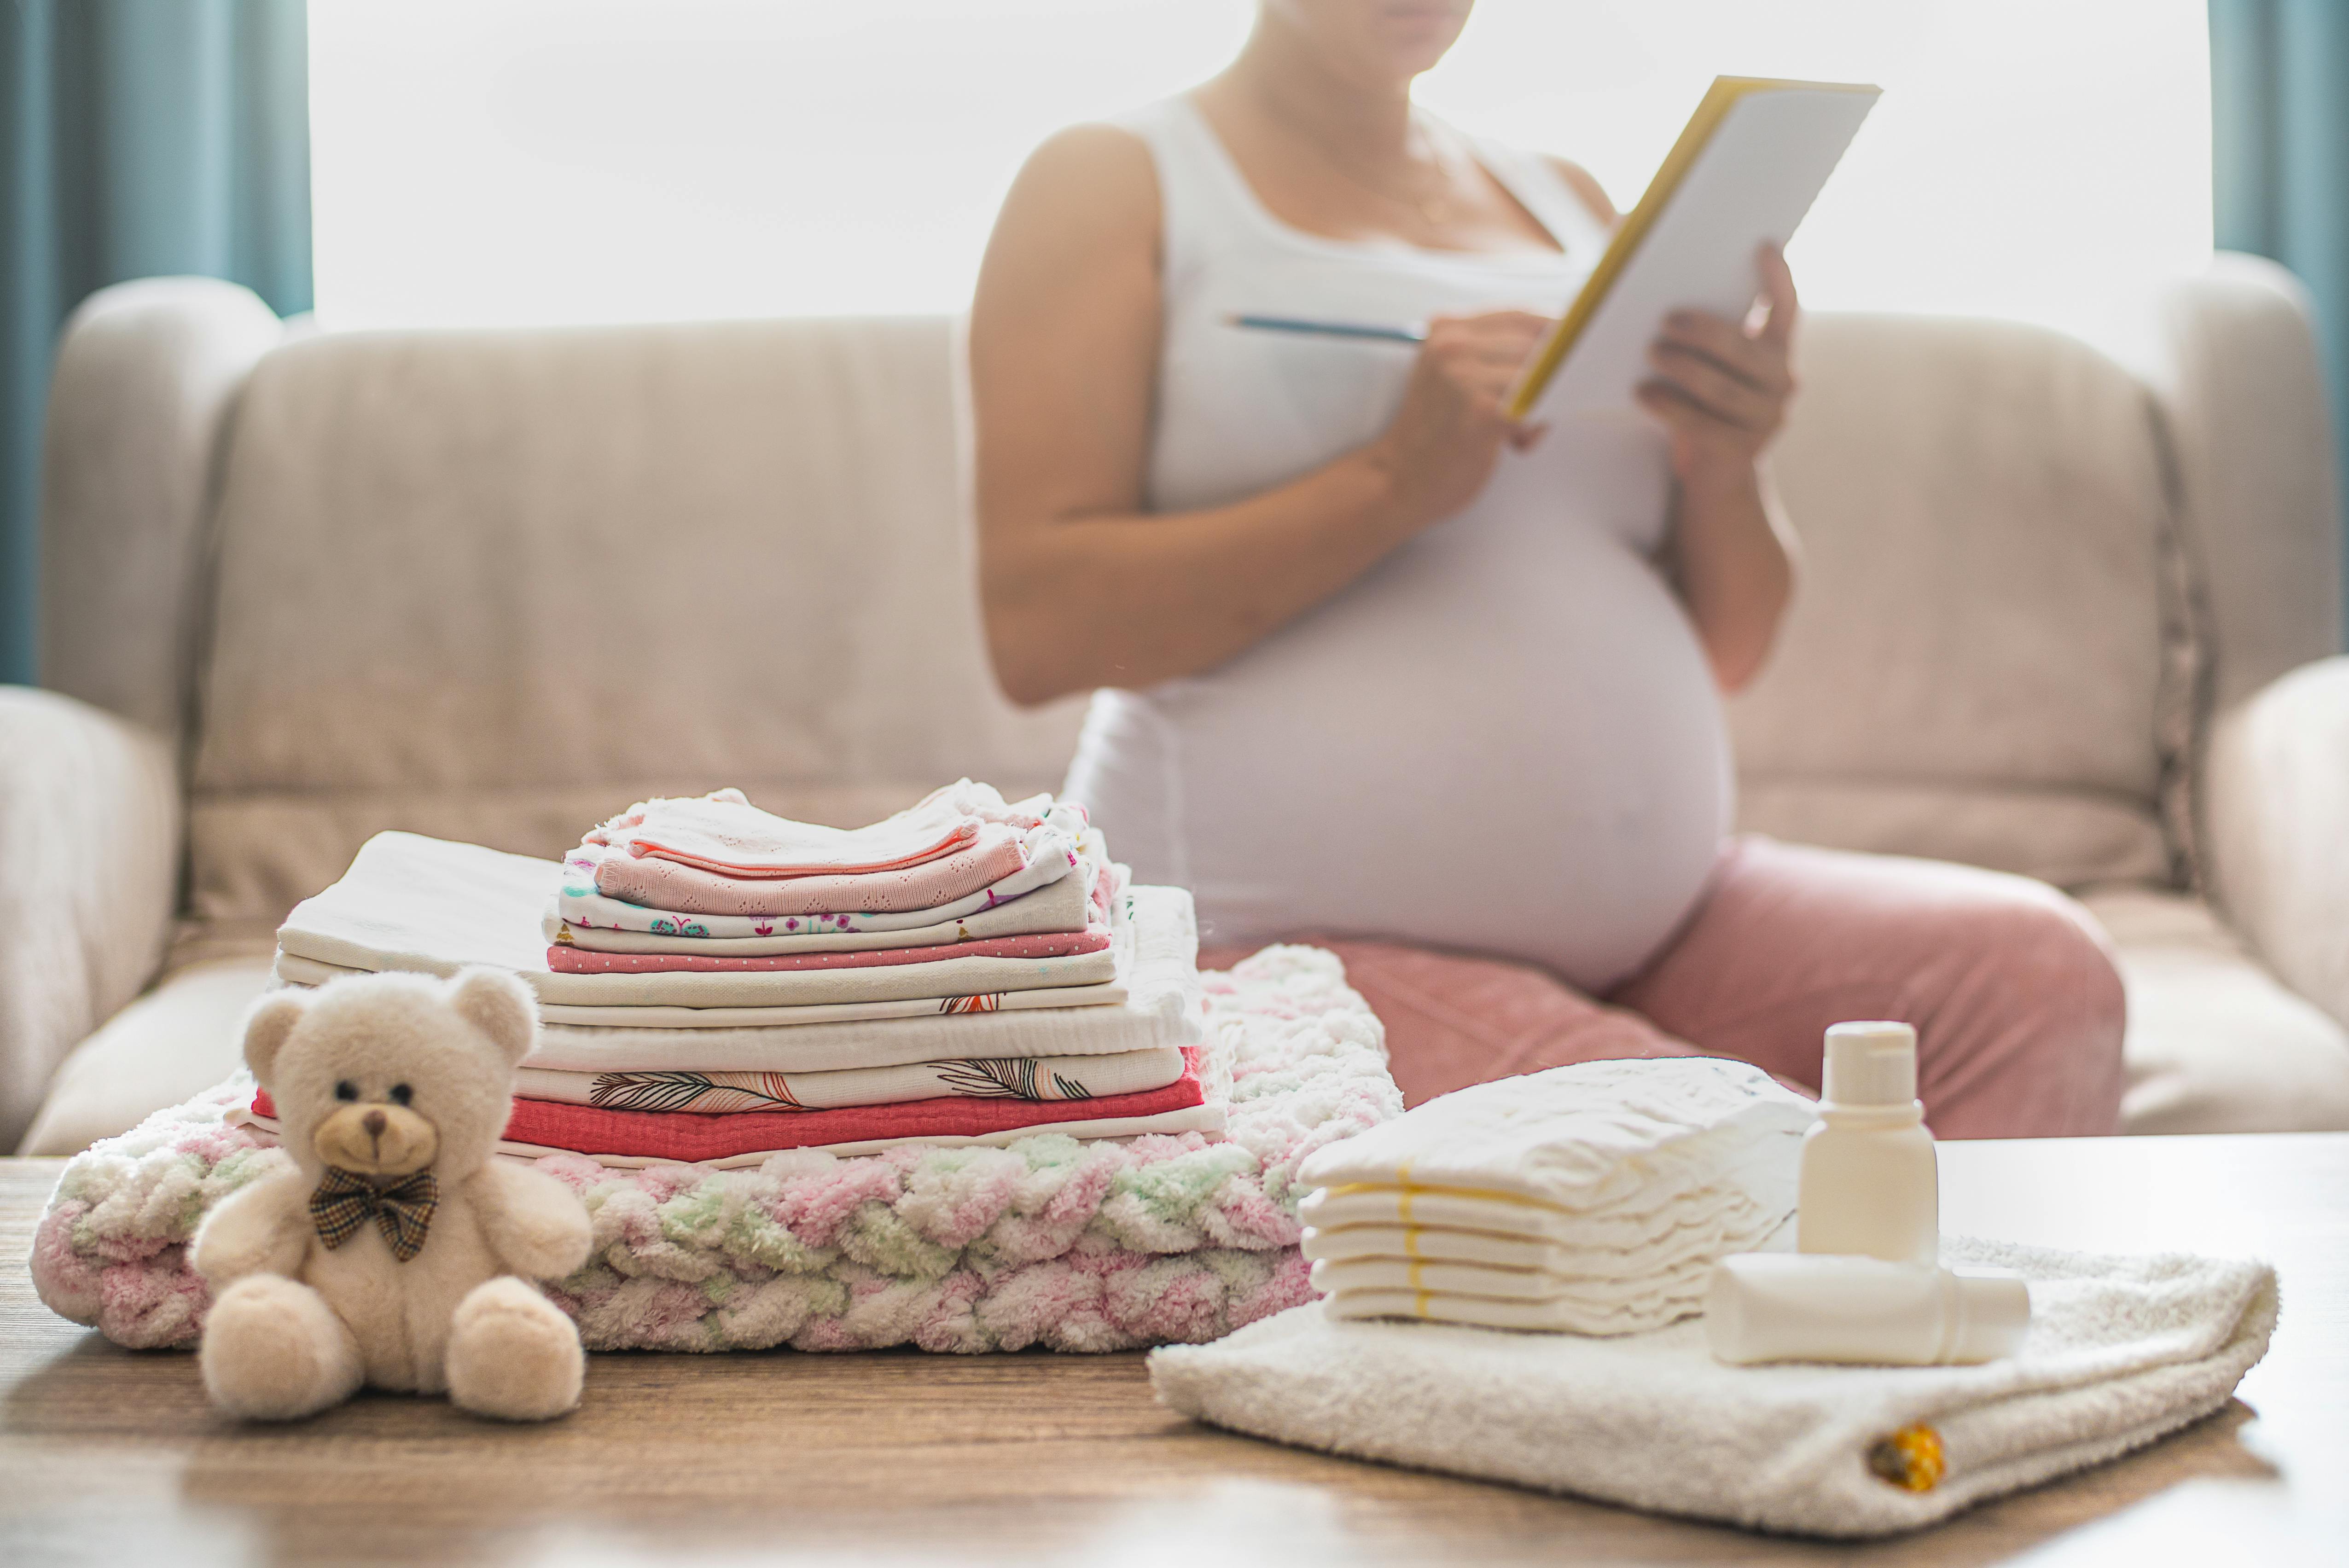 Babyudstyr: Det får du brug for til din nyfødte